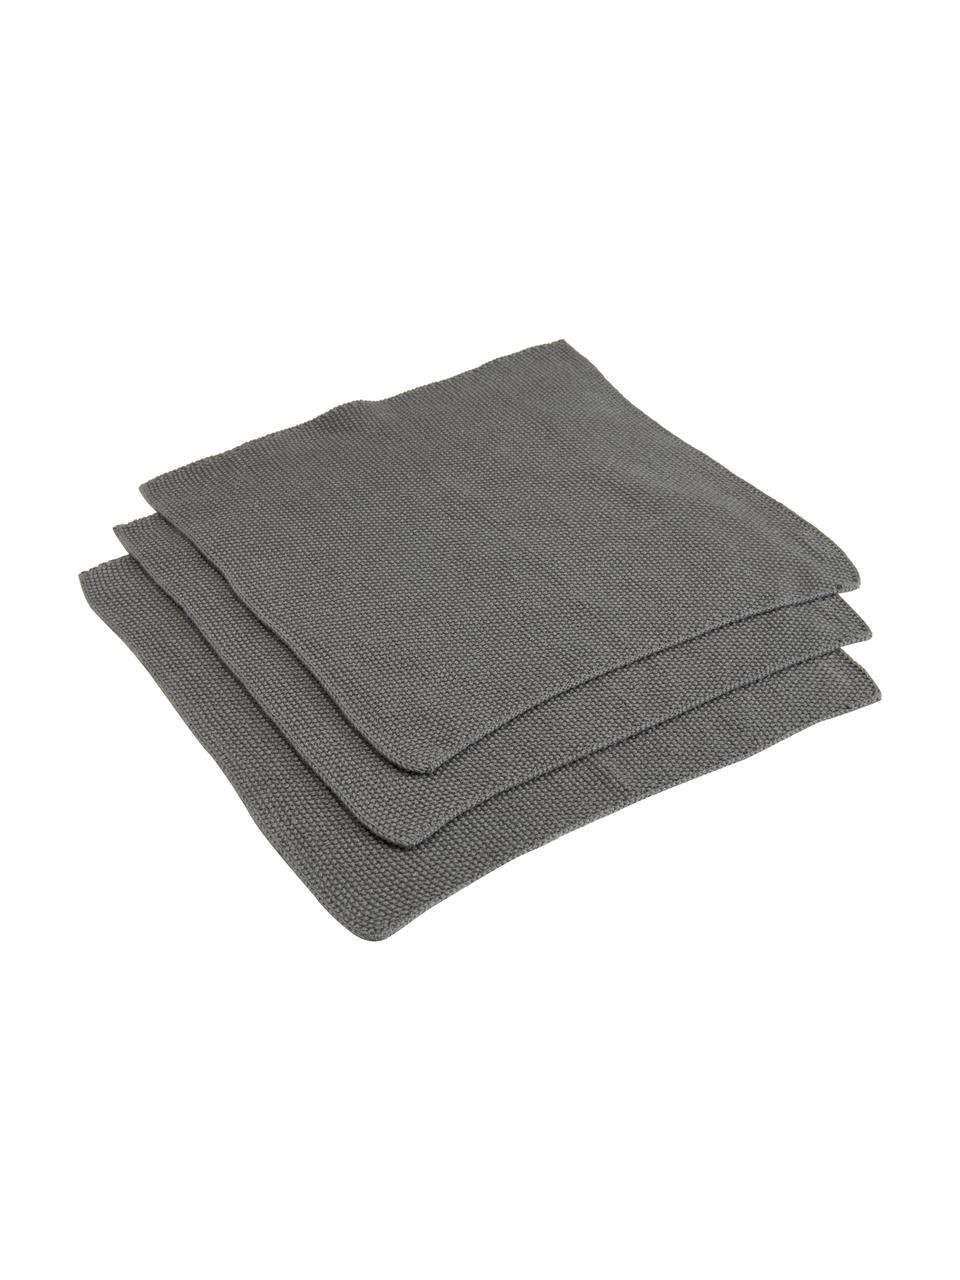 Baumwoll-Spültücher Soft in Grau, 3 Stück, 100 % Baumwolle, Grau, B 29 x L 30 cm